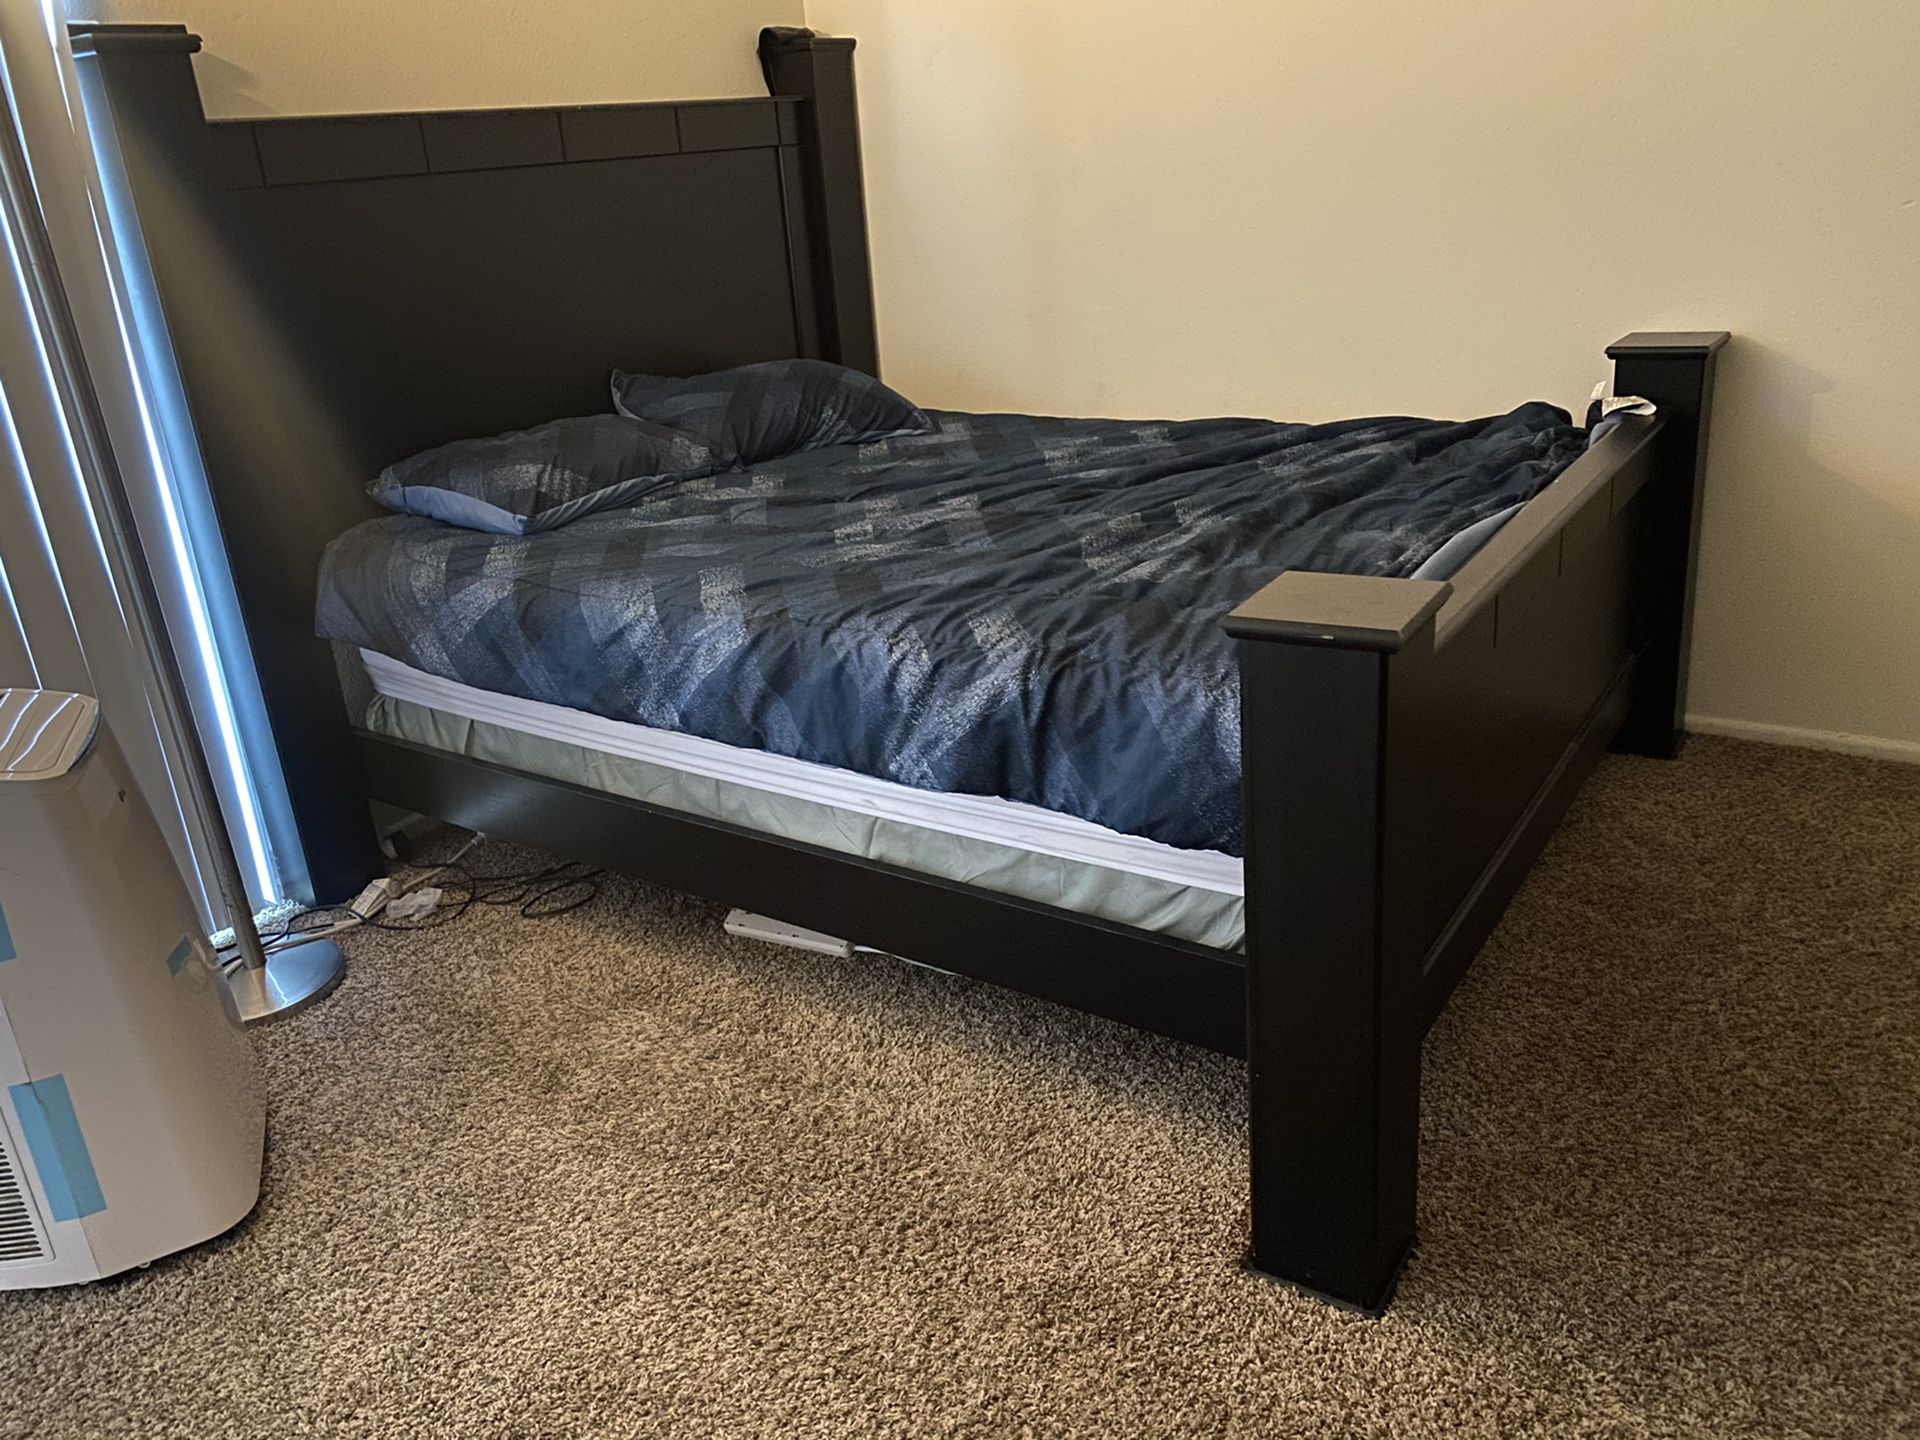 For sale. Bed set-